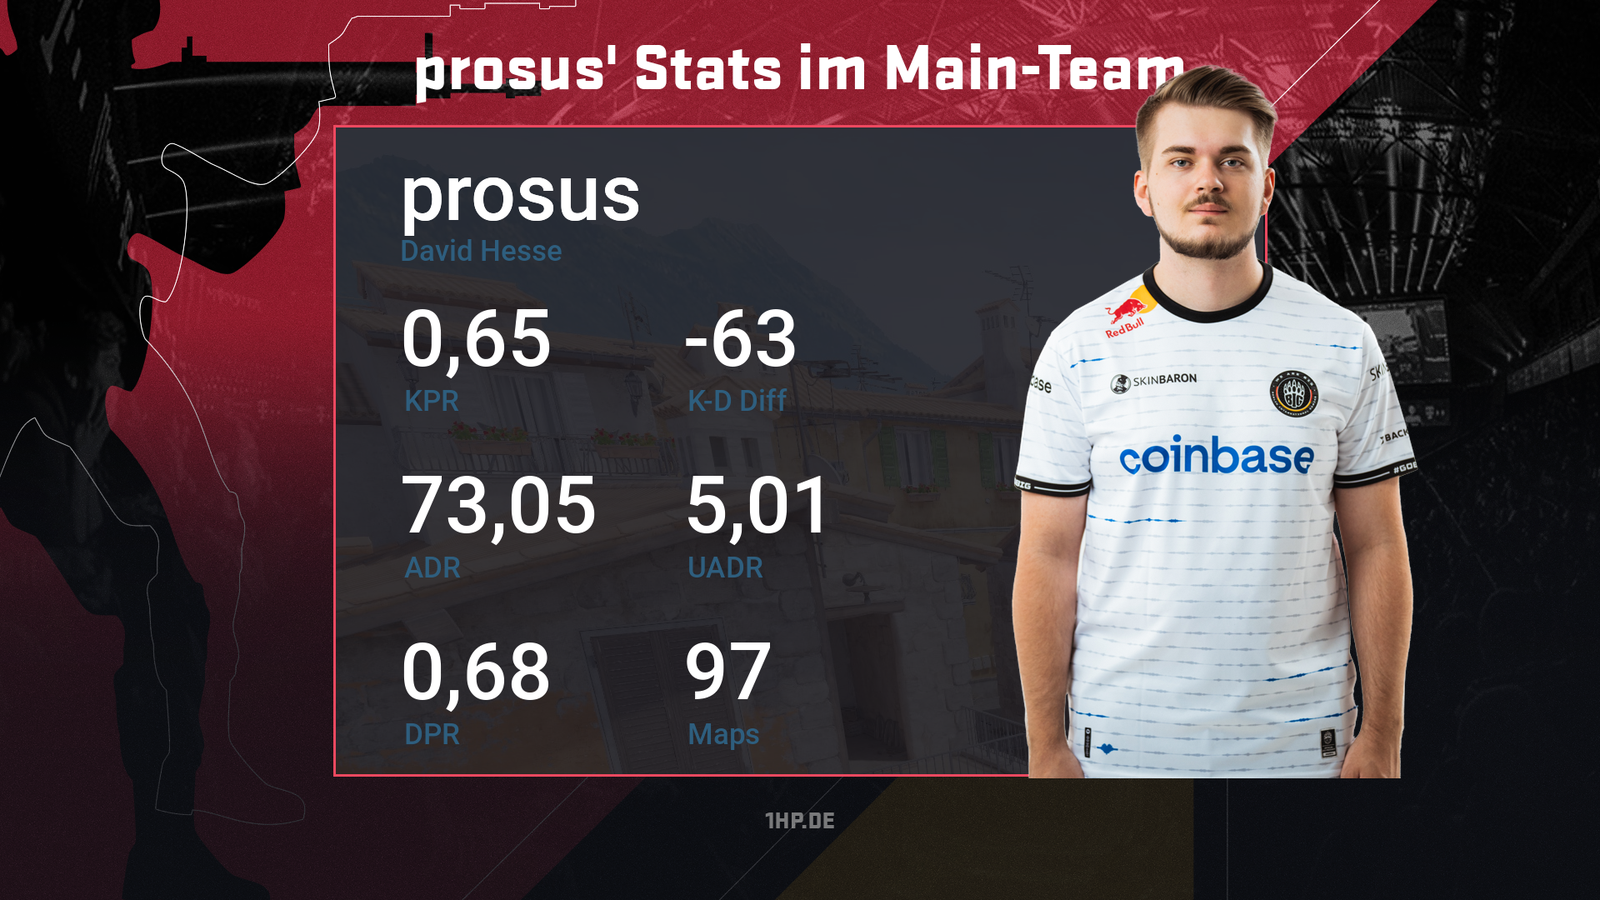 prosus Main-Team Stats